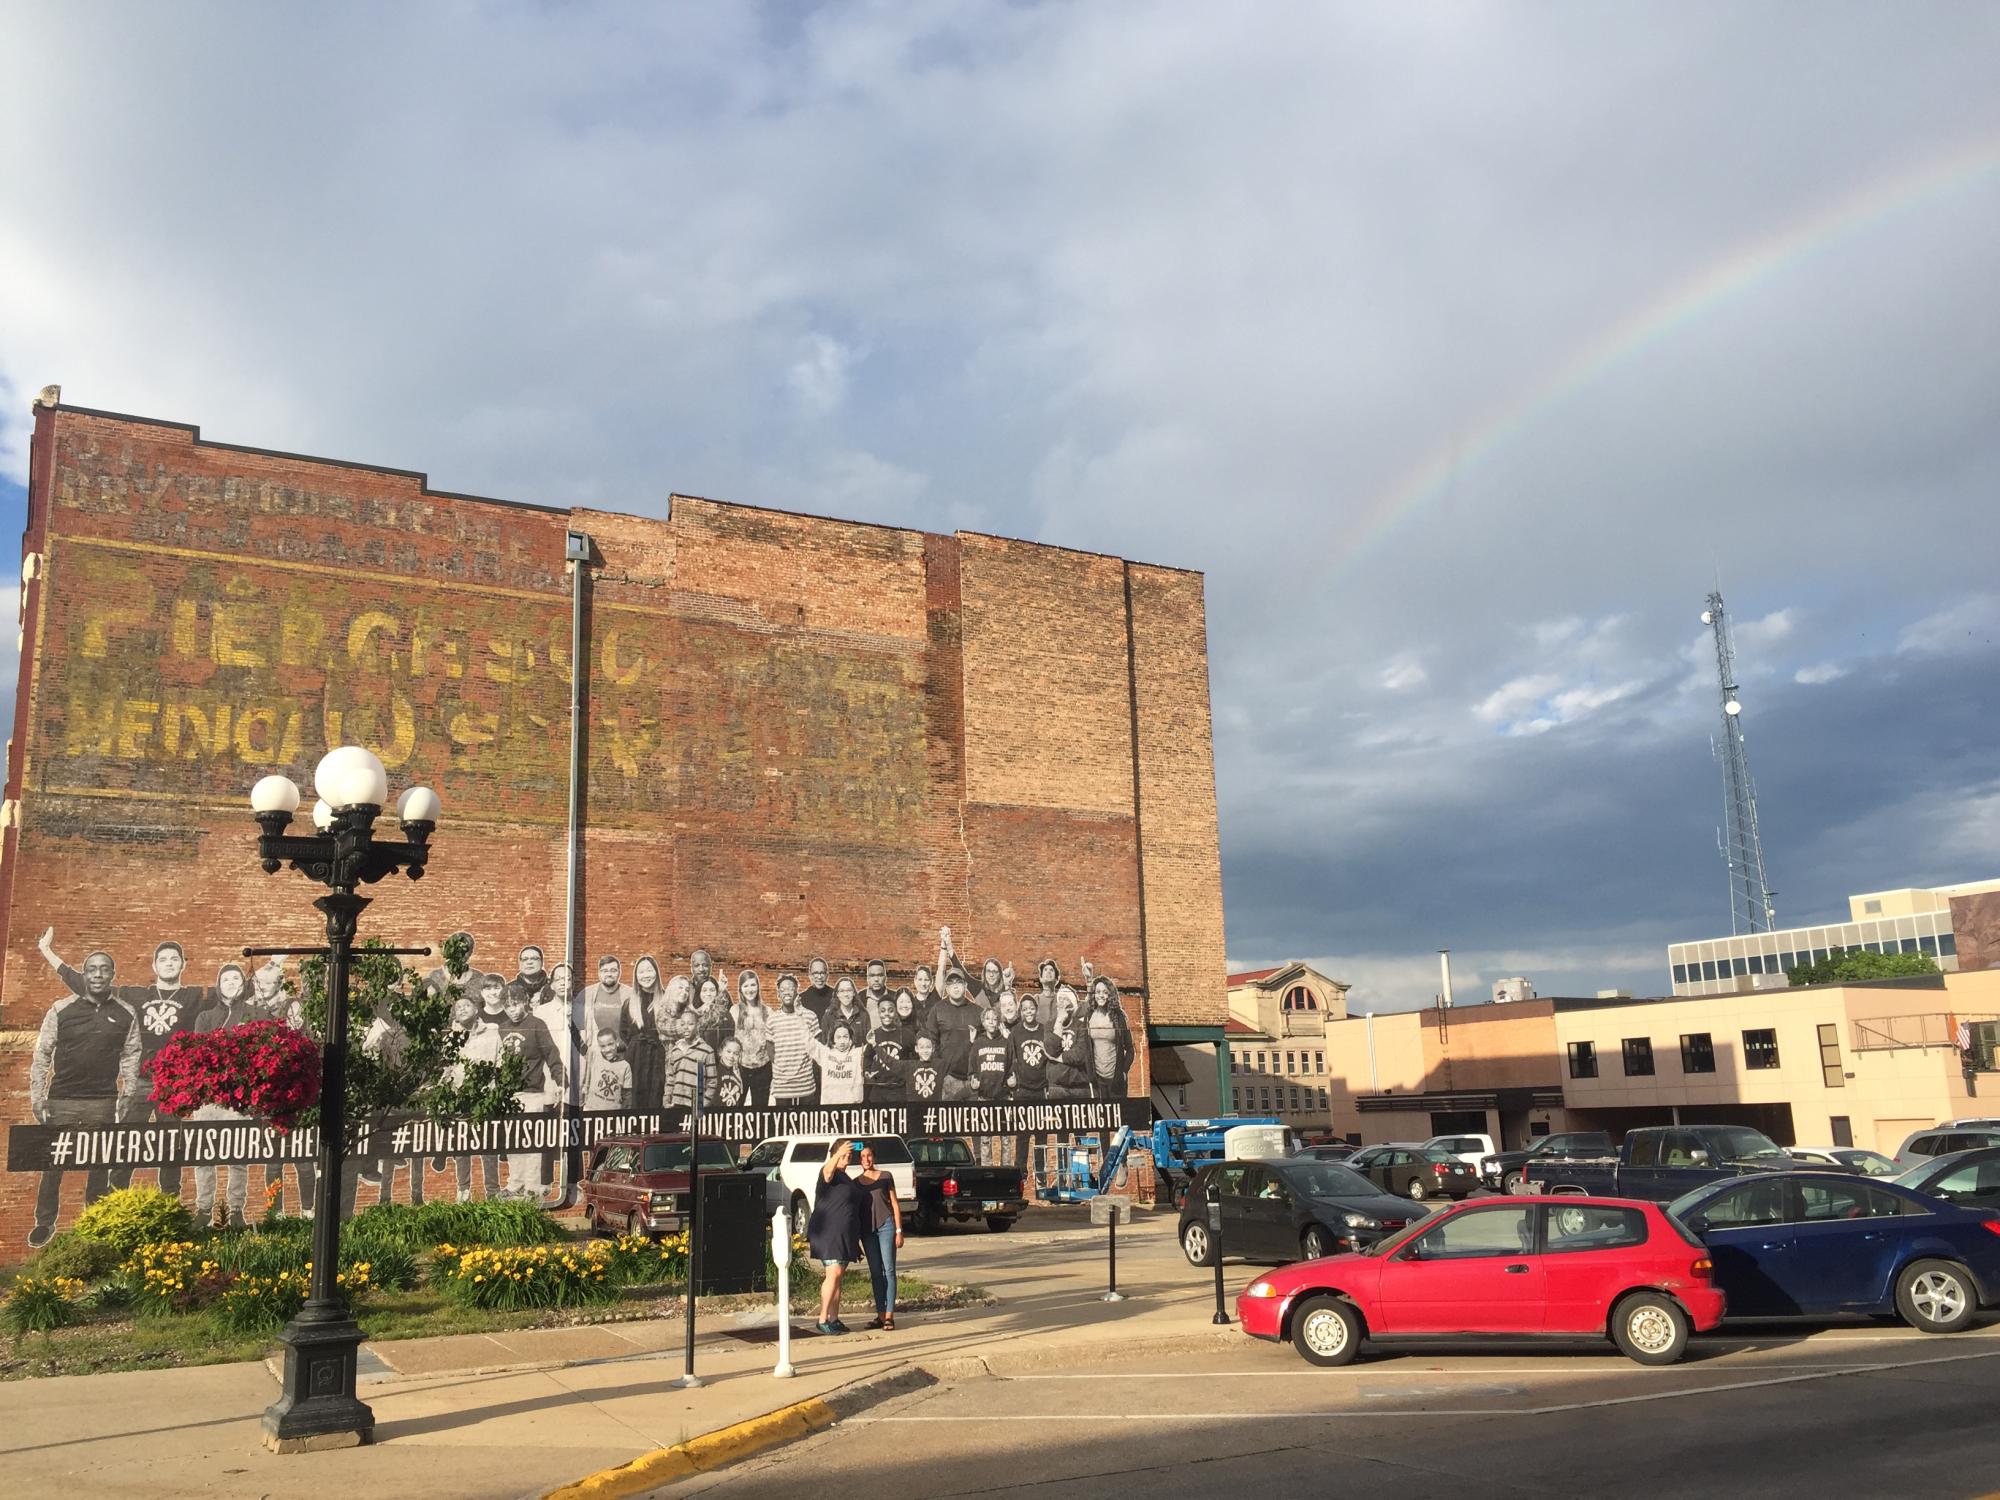 Rainbow over wheat paste mural